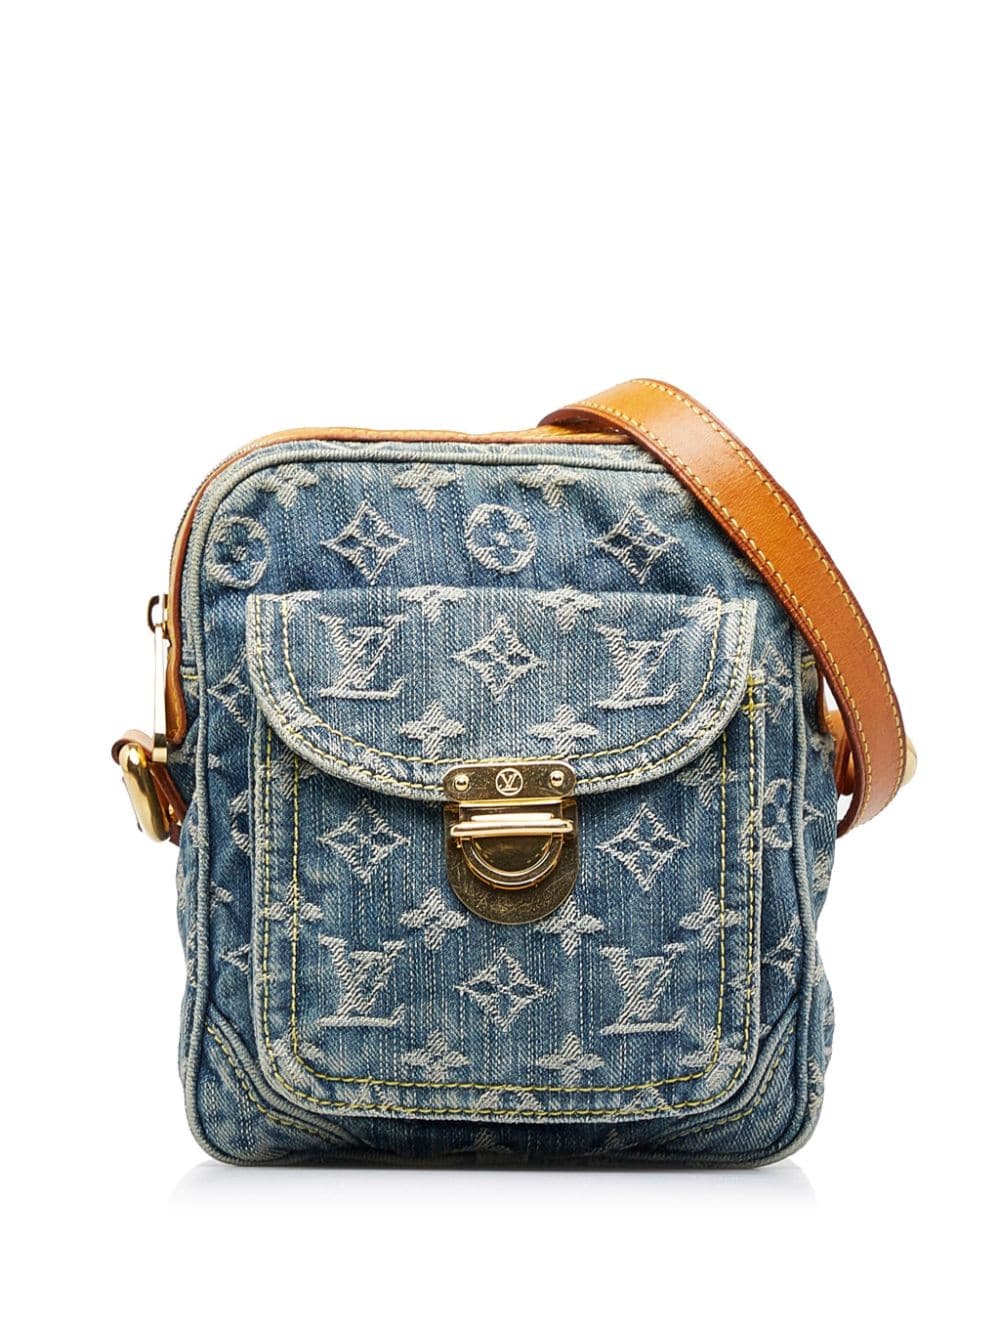 Louis Vuitton Monogram Denim Camera Bag